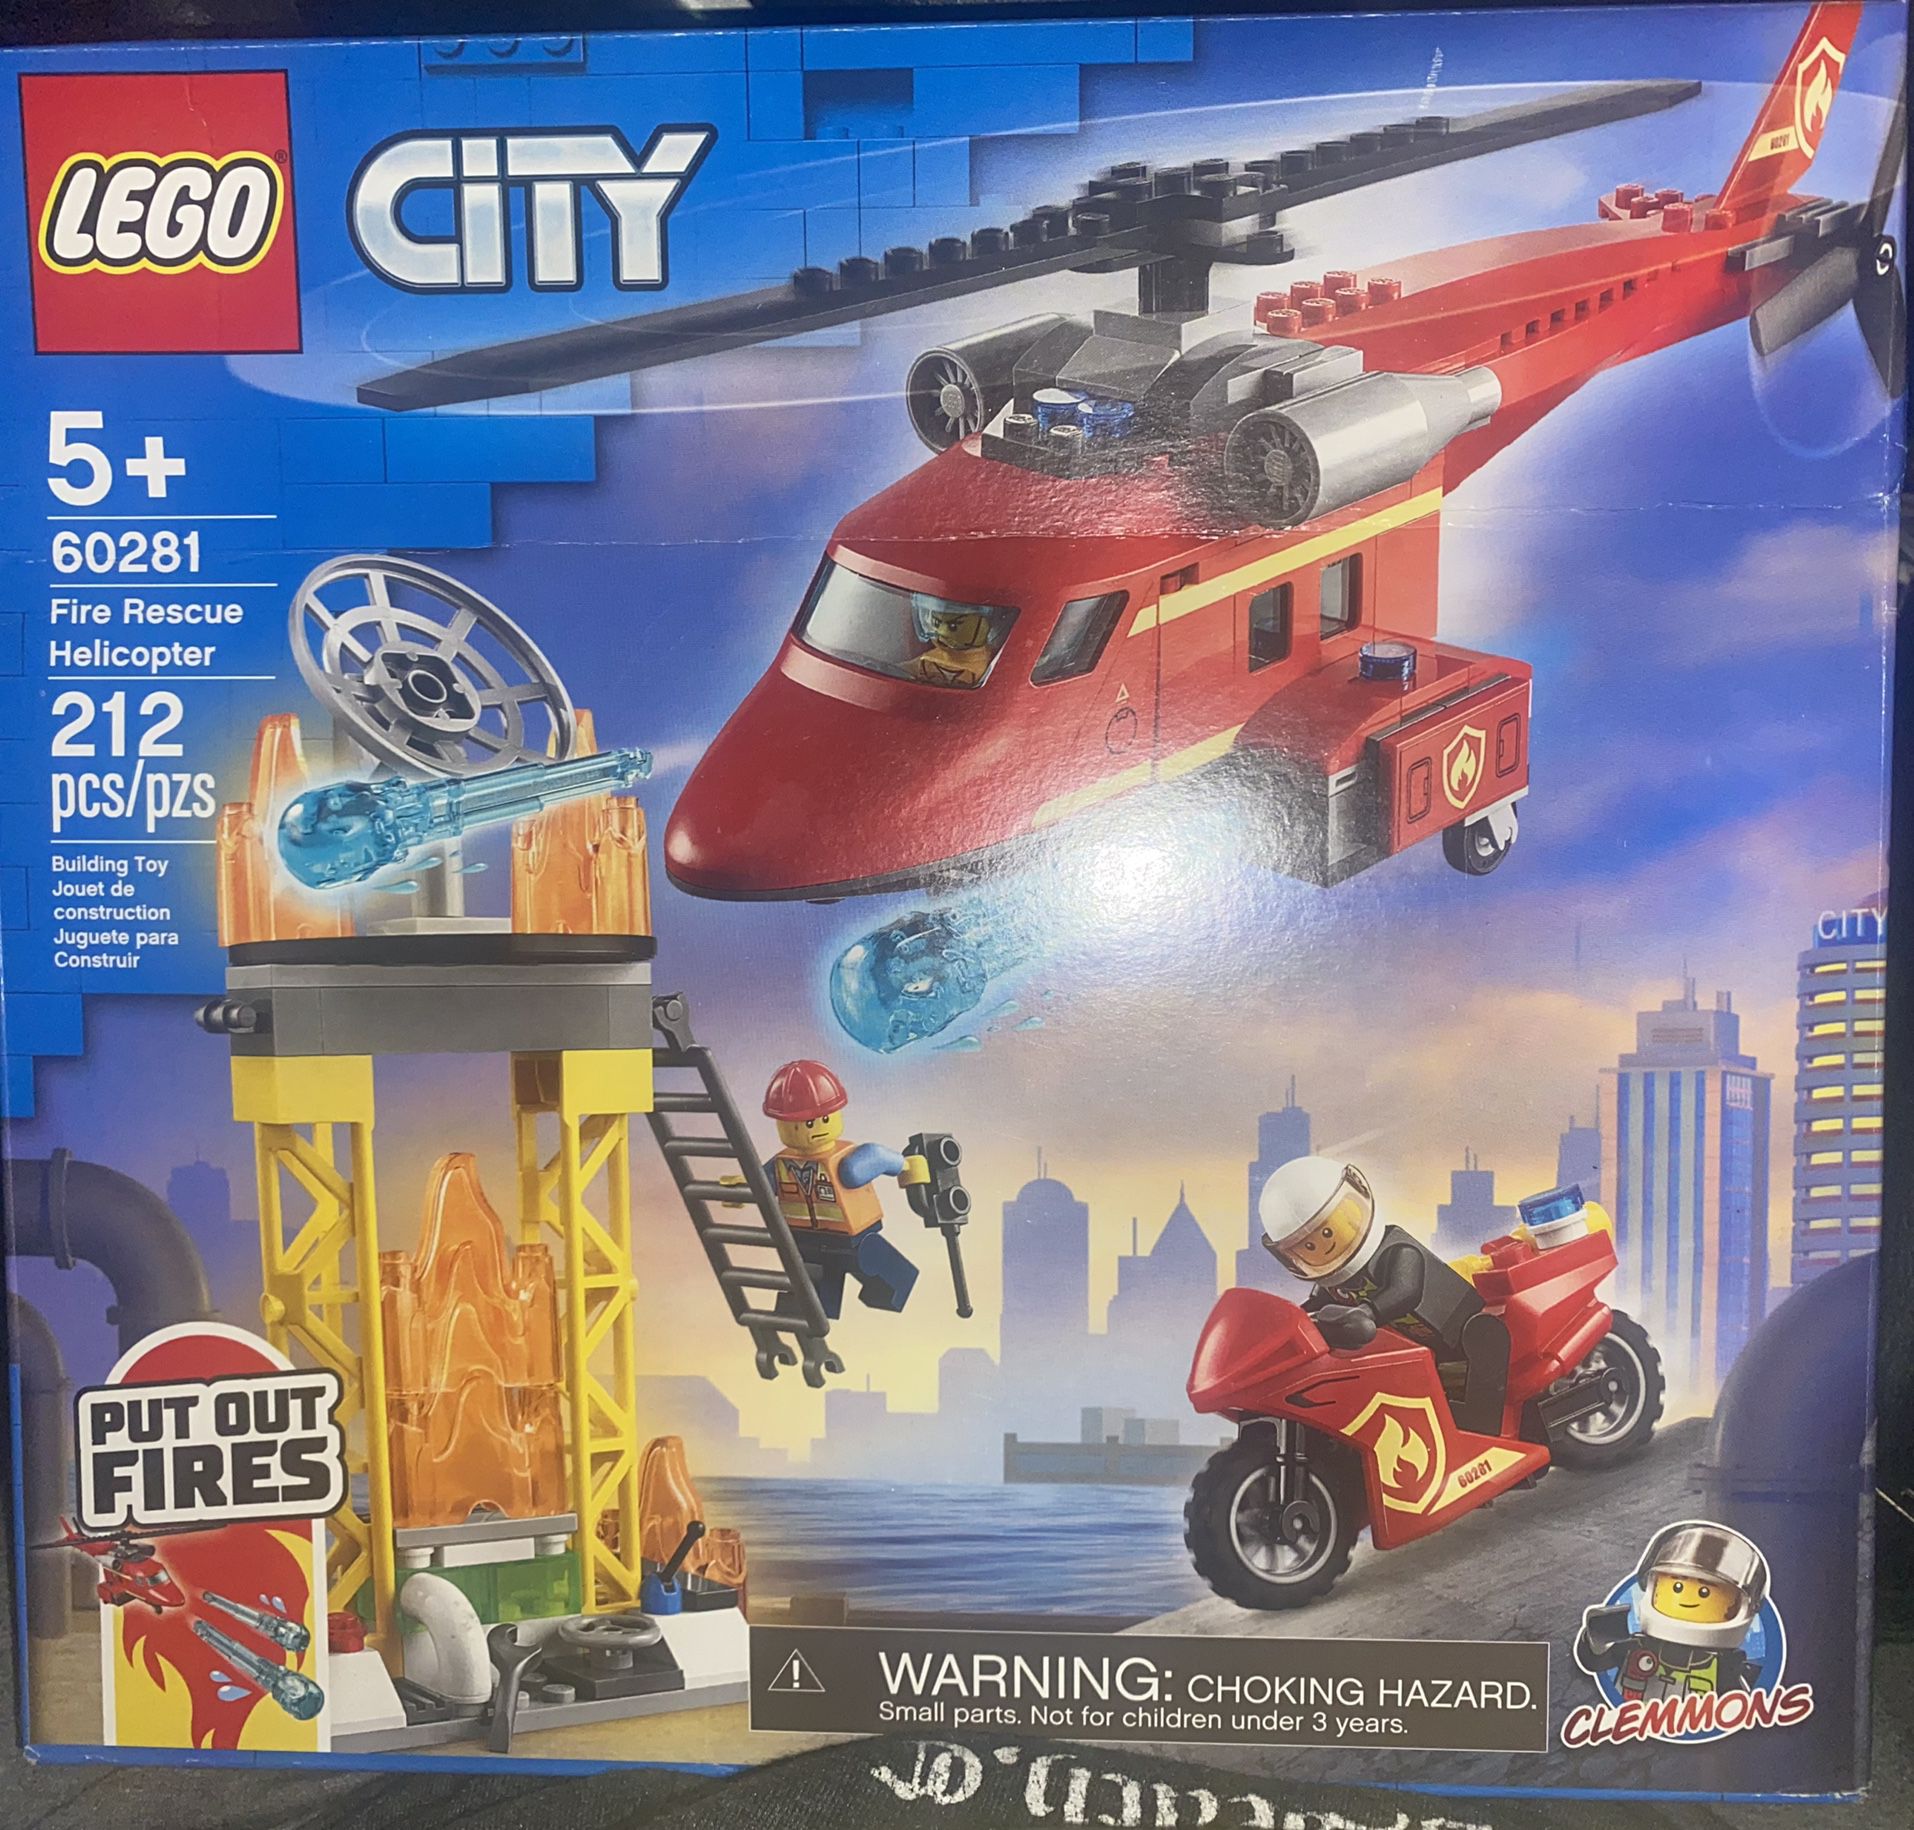 LEGO CITY 212 Pieces